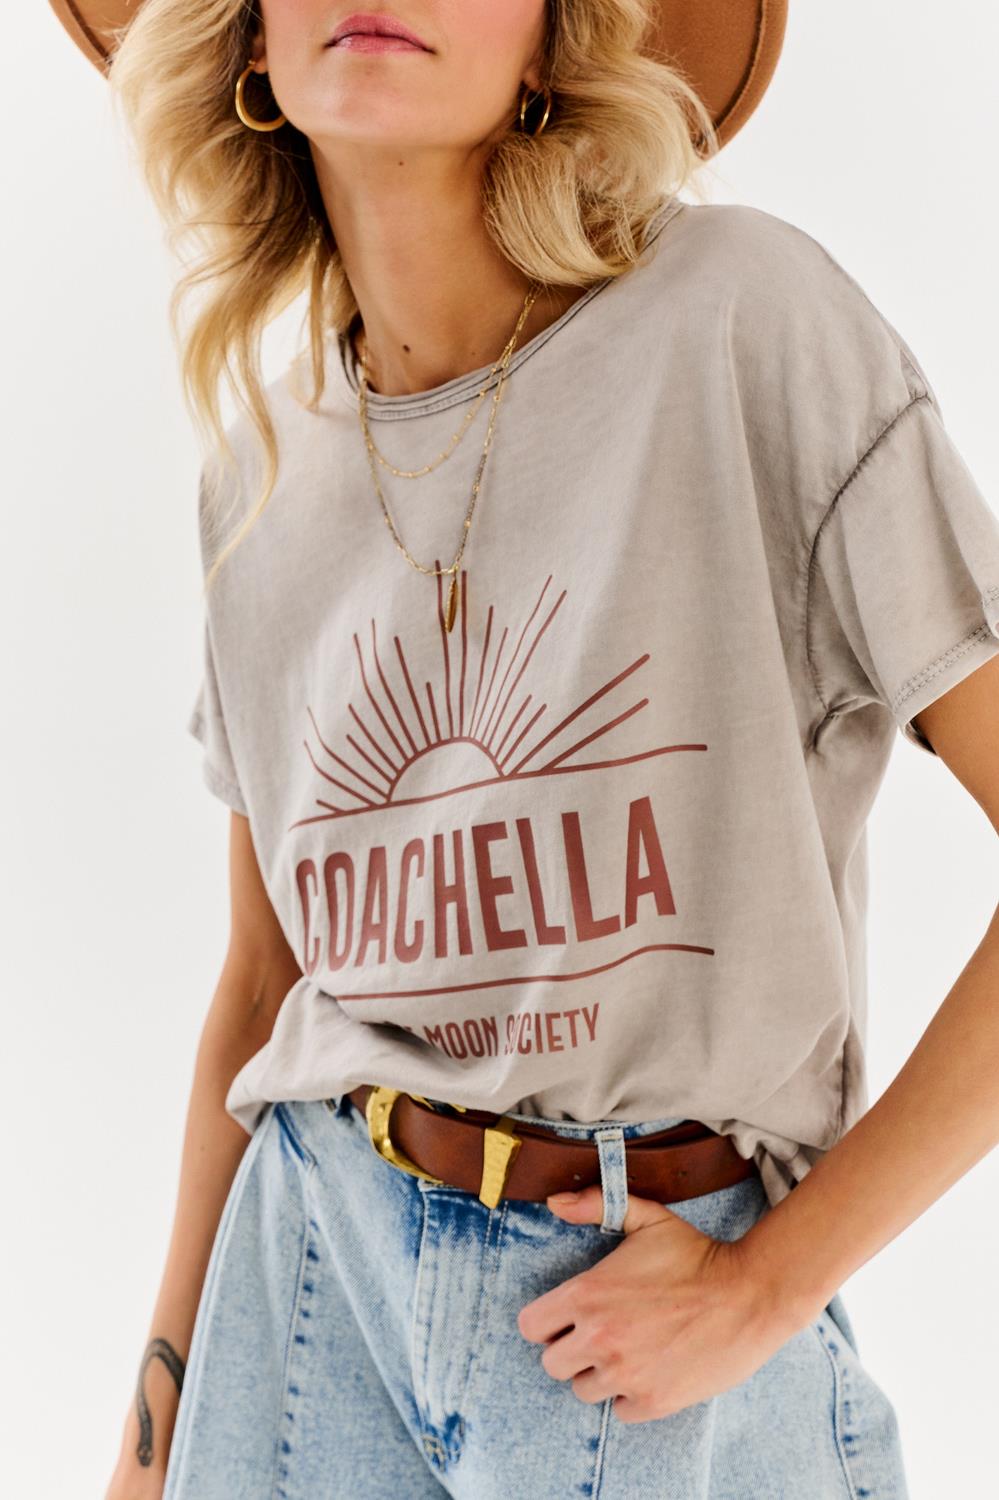 Coachella T-shirt